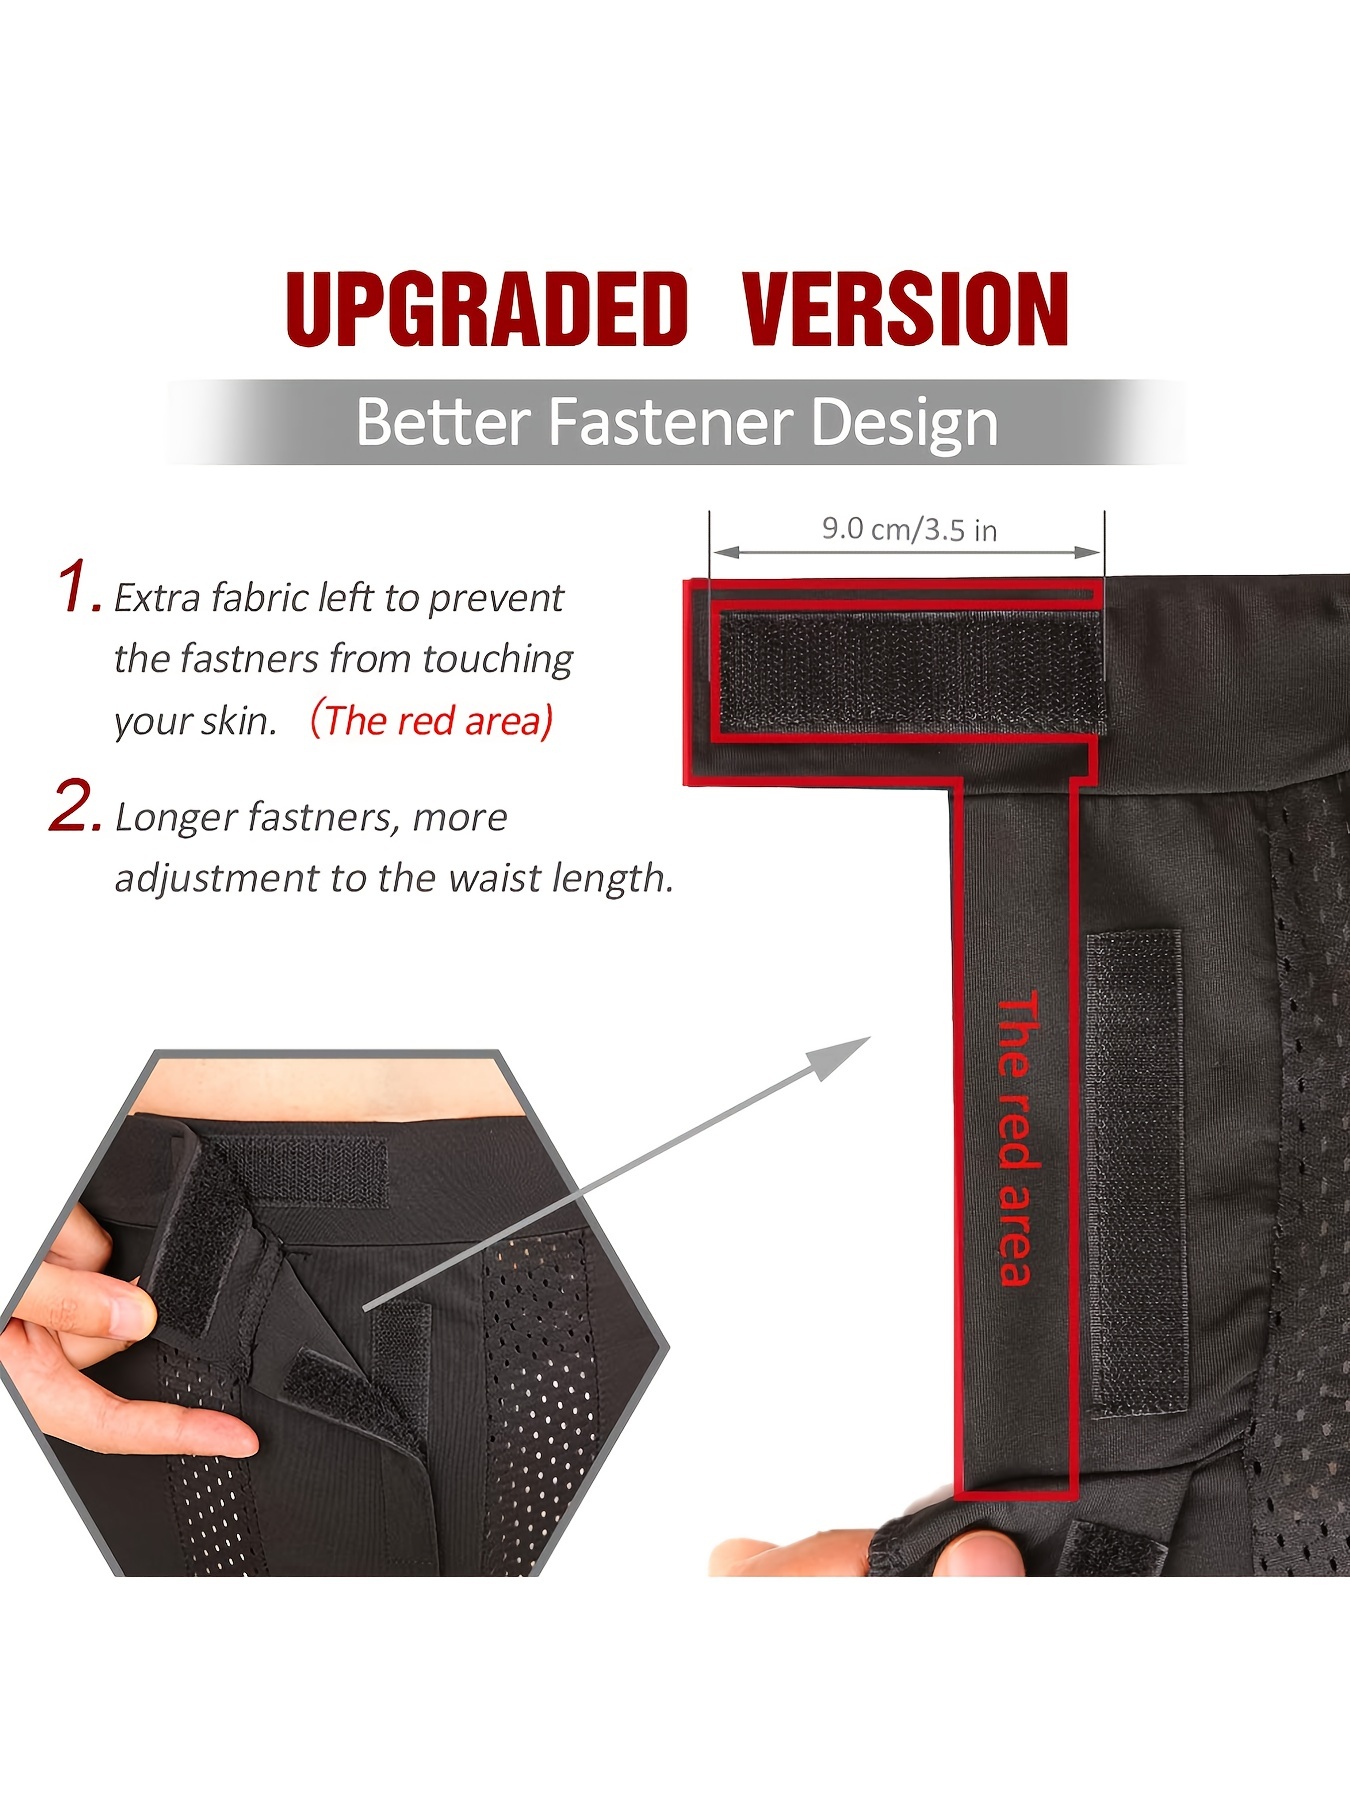  Cienfy 3D Hip Protective Padded Shorts EVA Tailbone